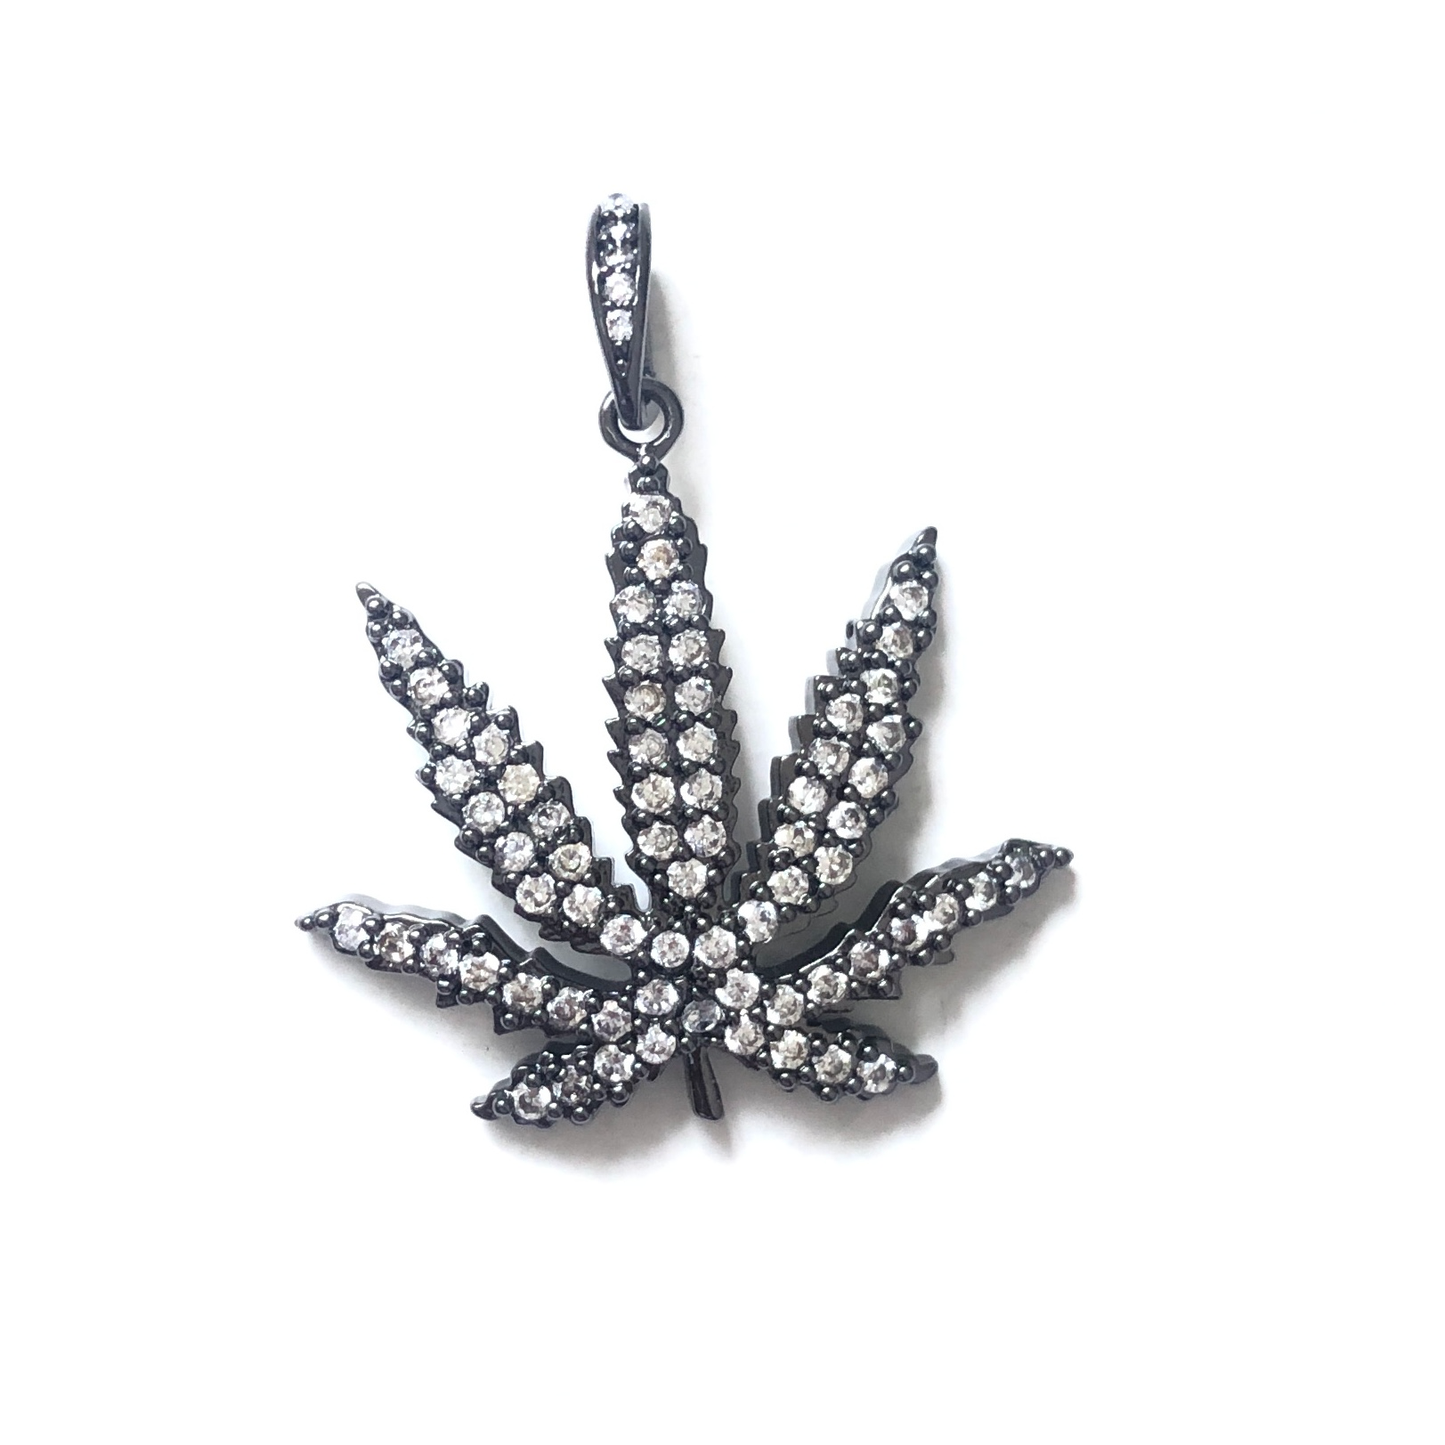 10pcs/lot 25*21.5mm CZ Paved Cannabis Leaf Plant Charms Black CZ Paved Charms Flowers Charms Beads Beyond